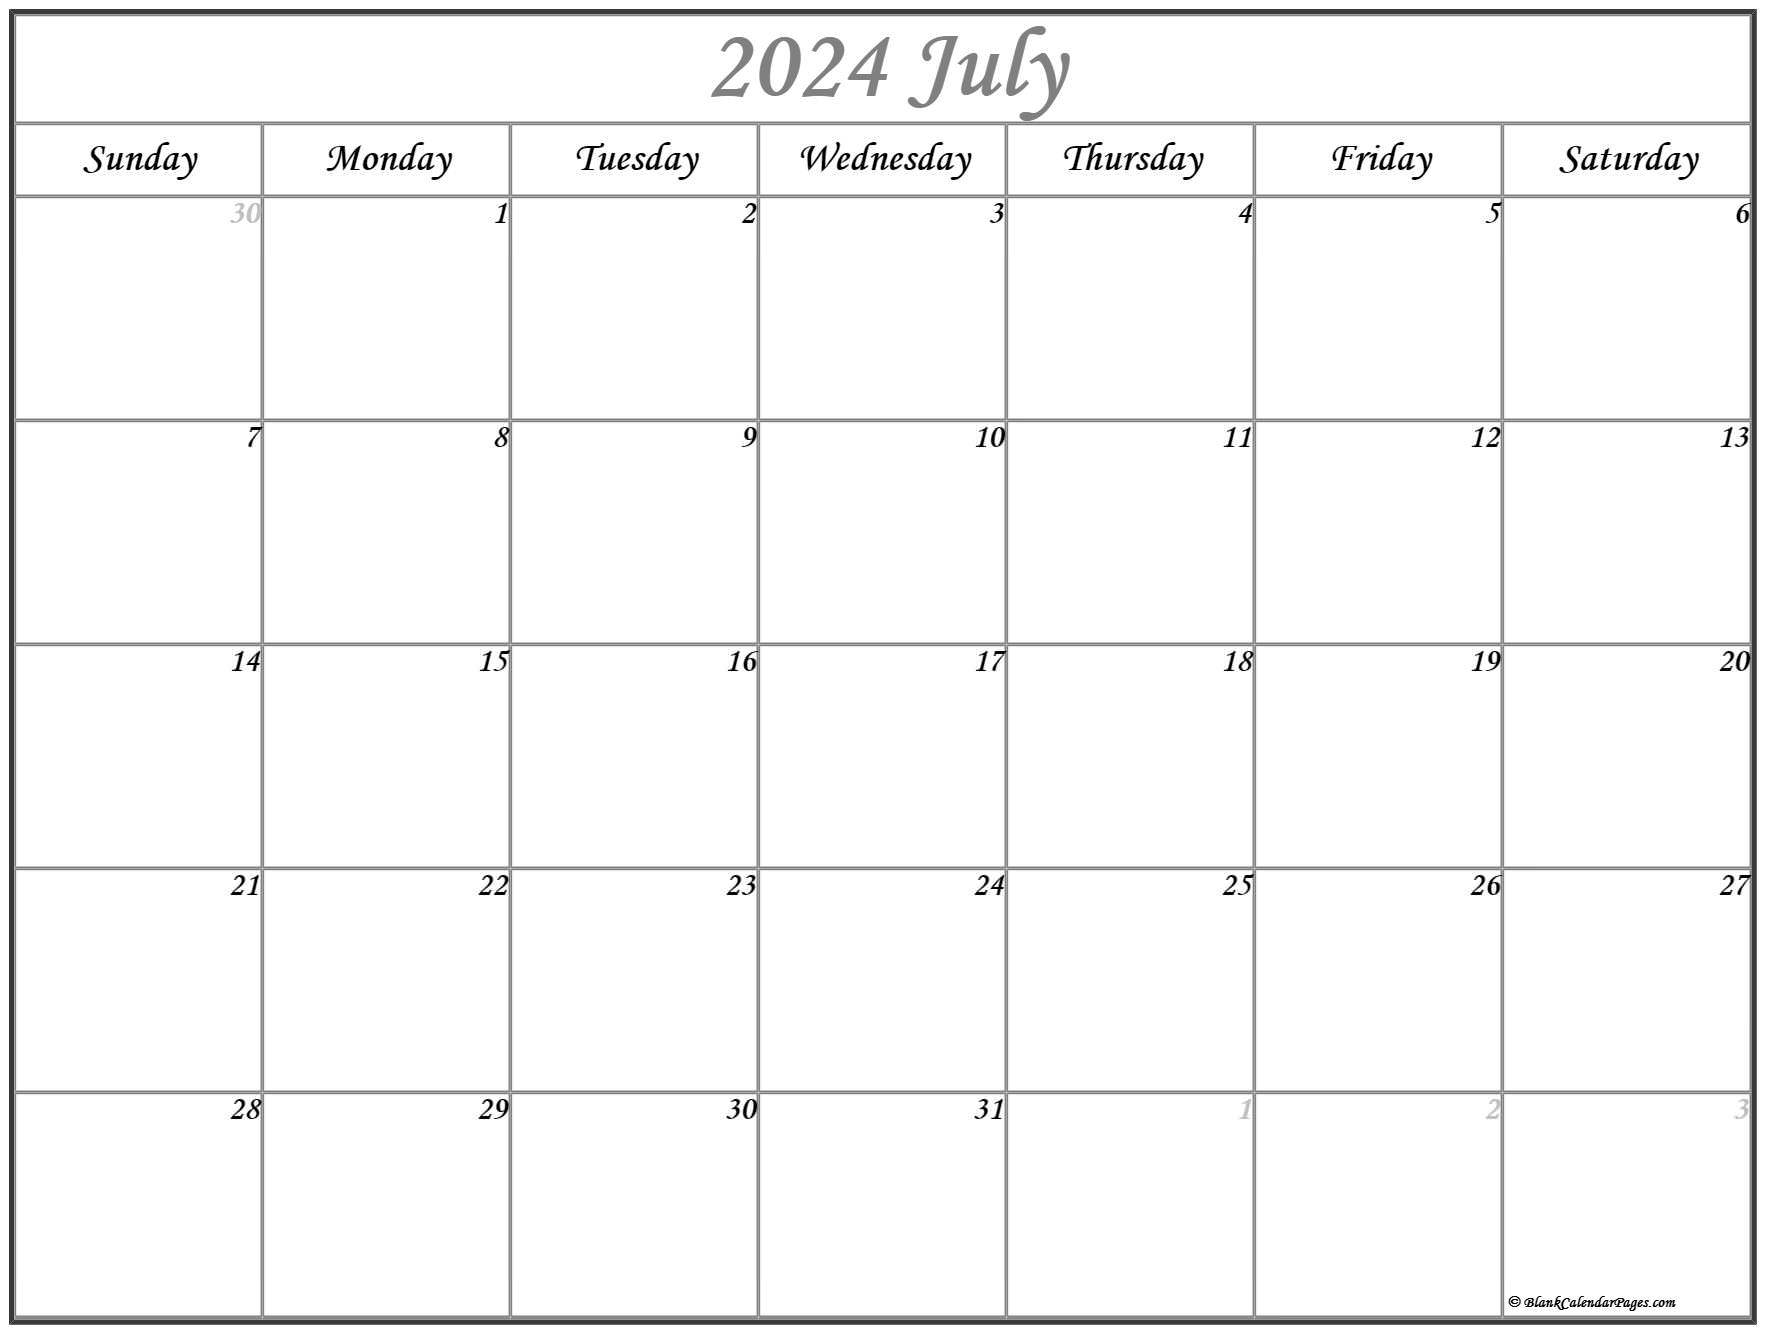 July 2020 calendar | free printable monthly calendars